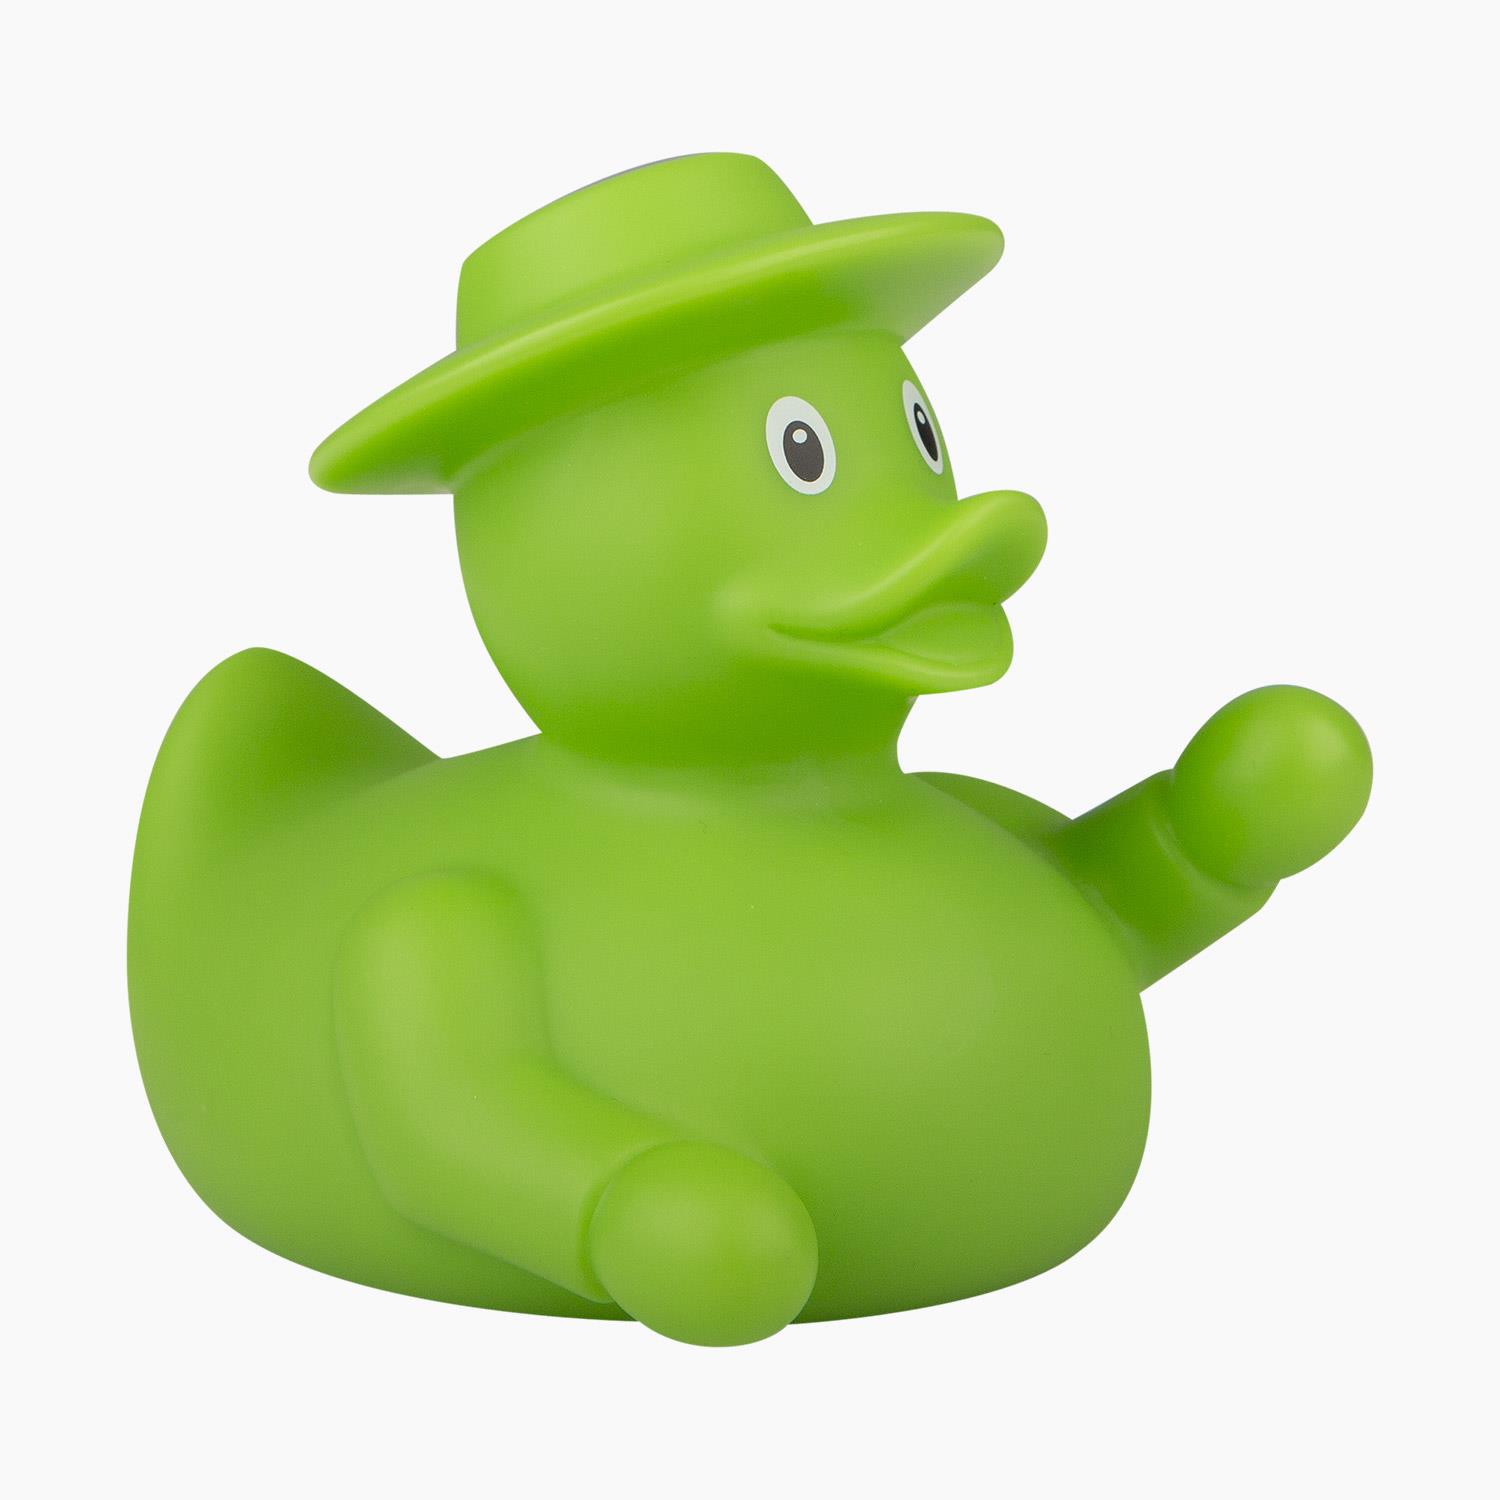 KÄPTN SCHNABEL green/ Rubber Duck